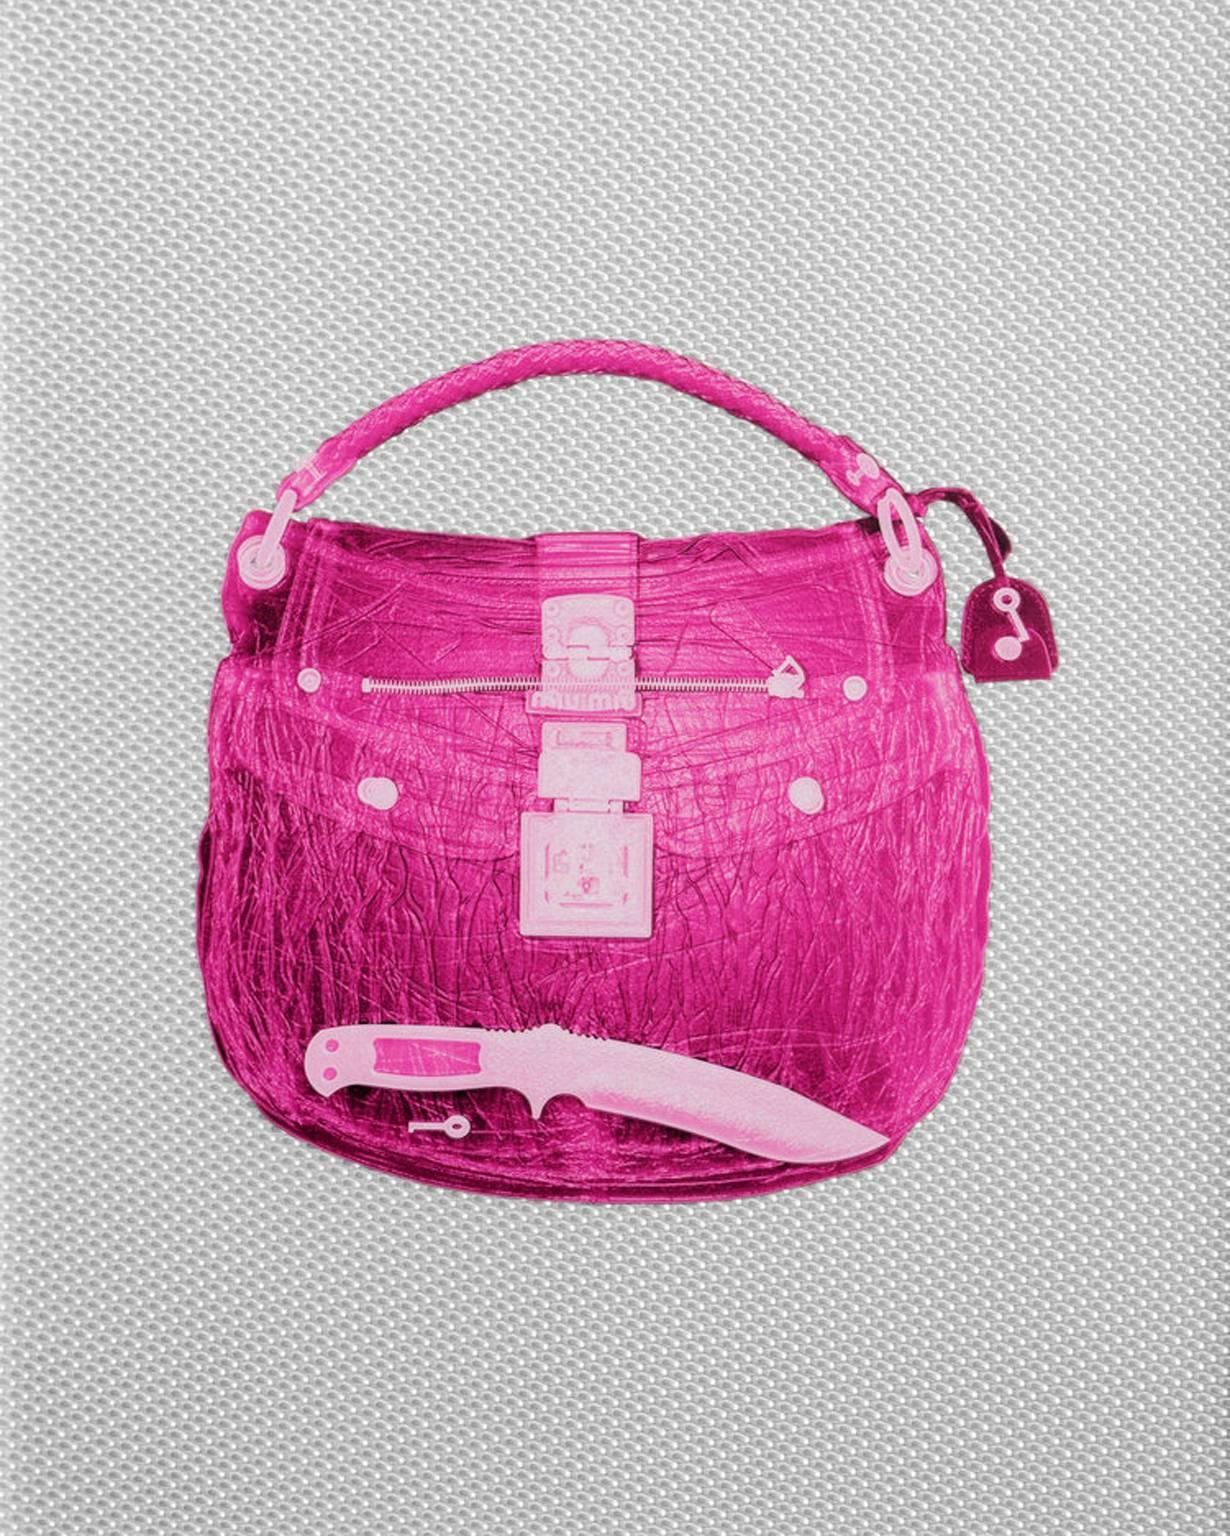 Blazo Kovacevic Print - Color Photograph, "Magenta Miu Miu Handbag with Knife" (Fashion, Designer Bag)